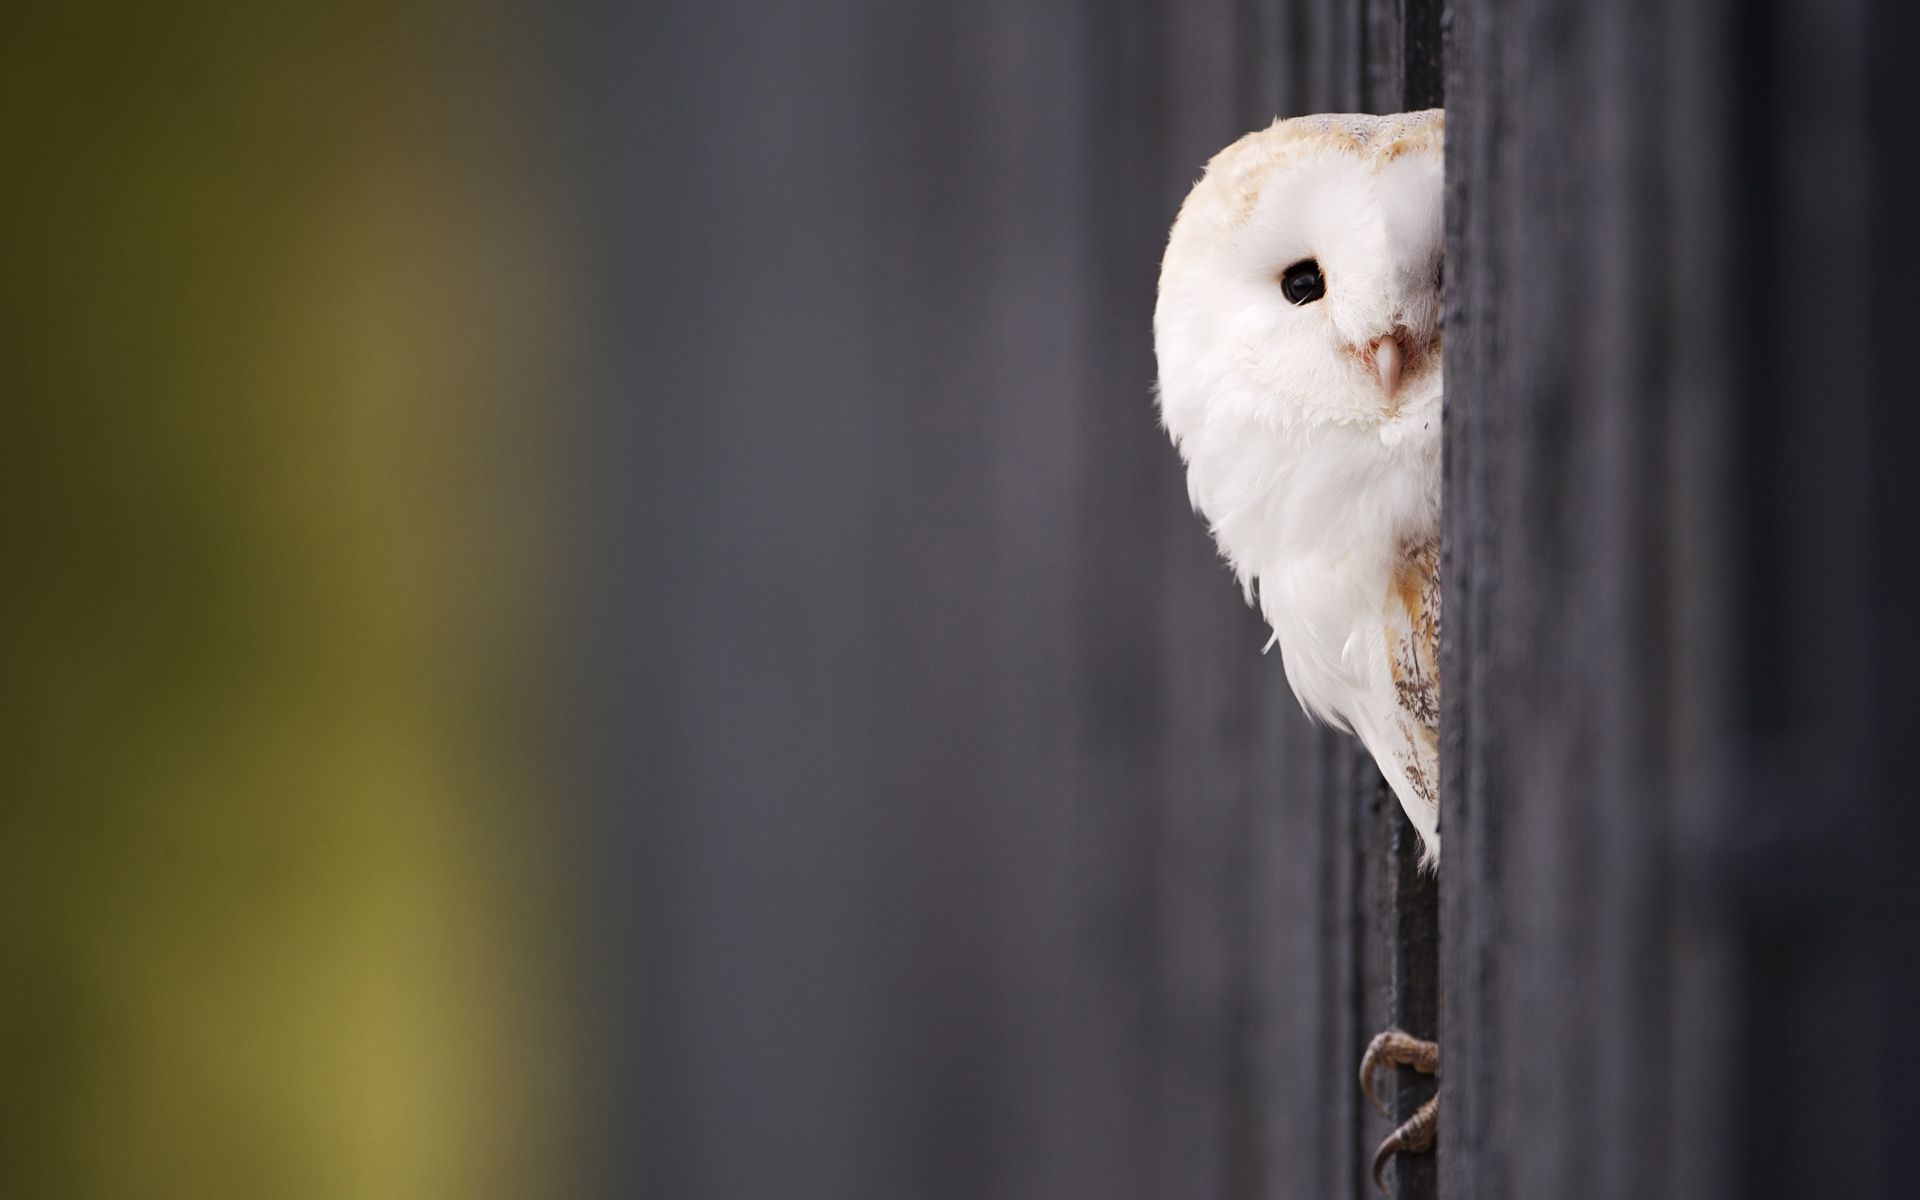 Cute Winter Owl Wallpaperwalpaperlist.com